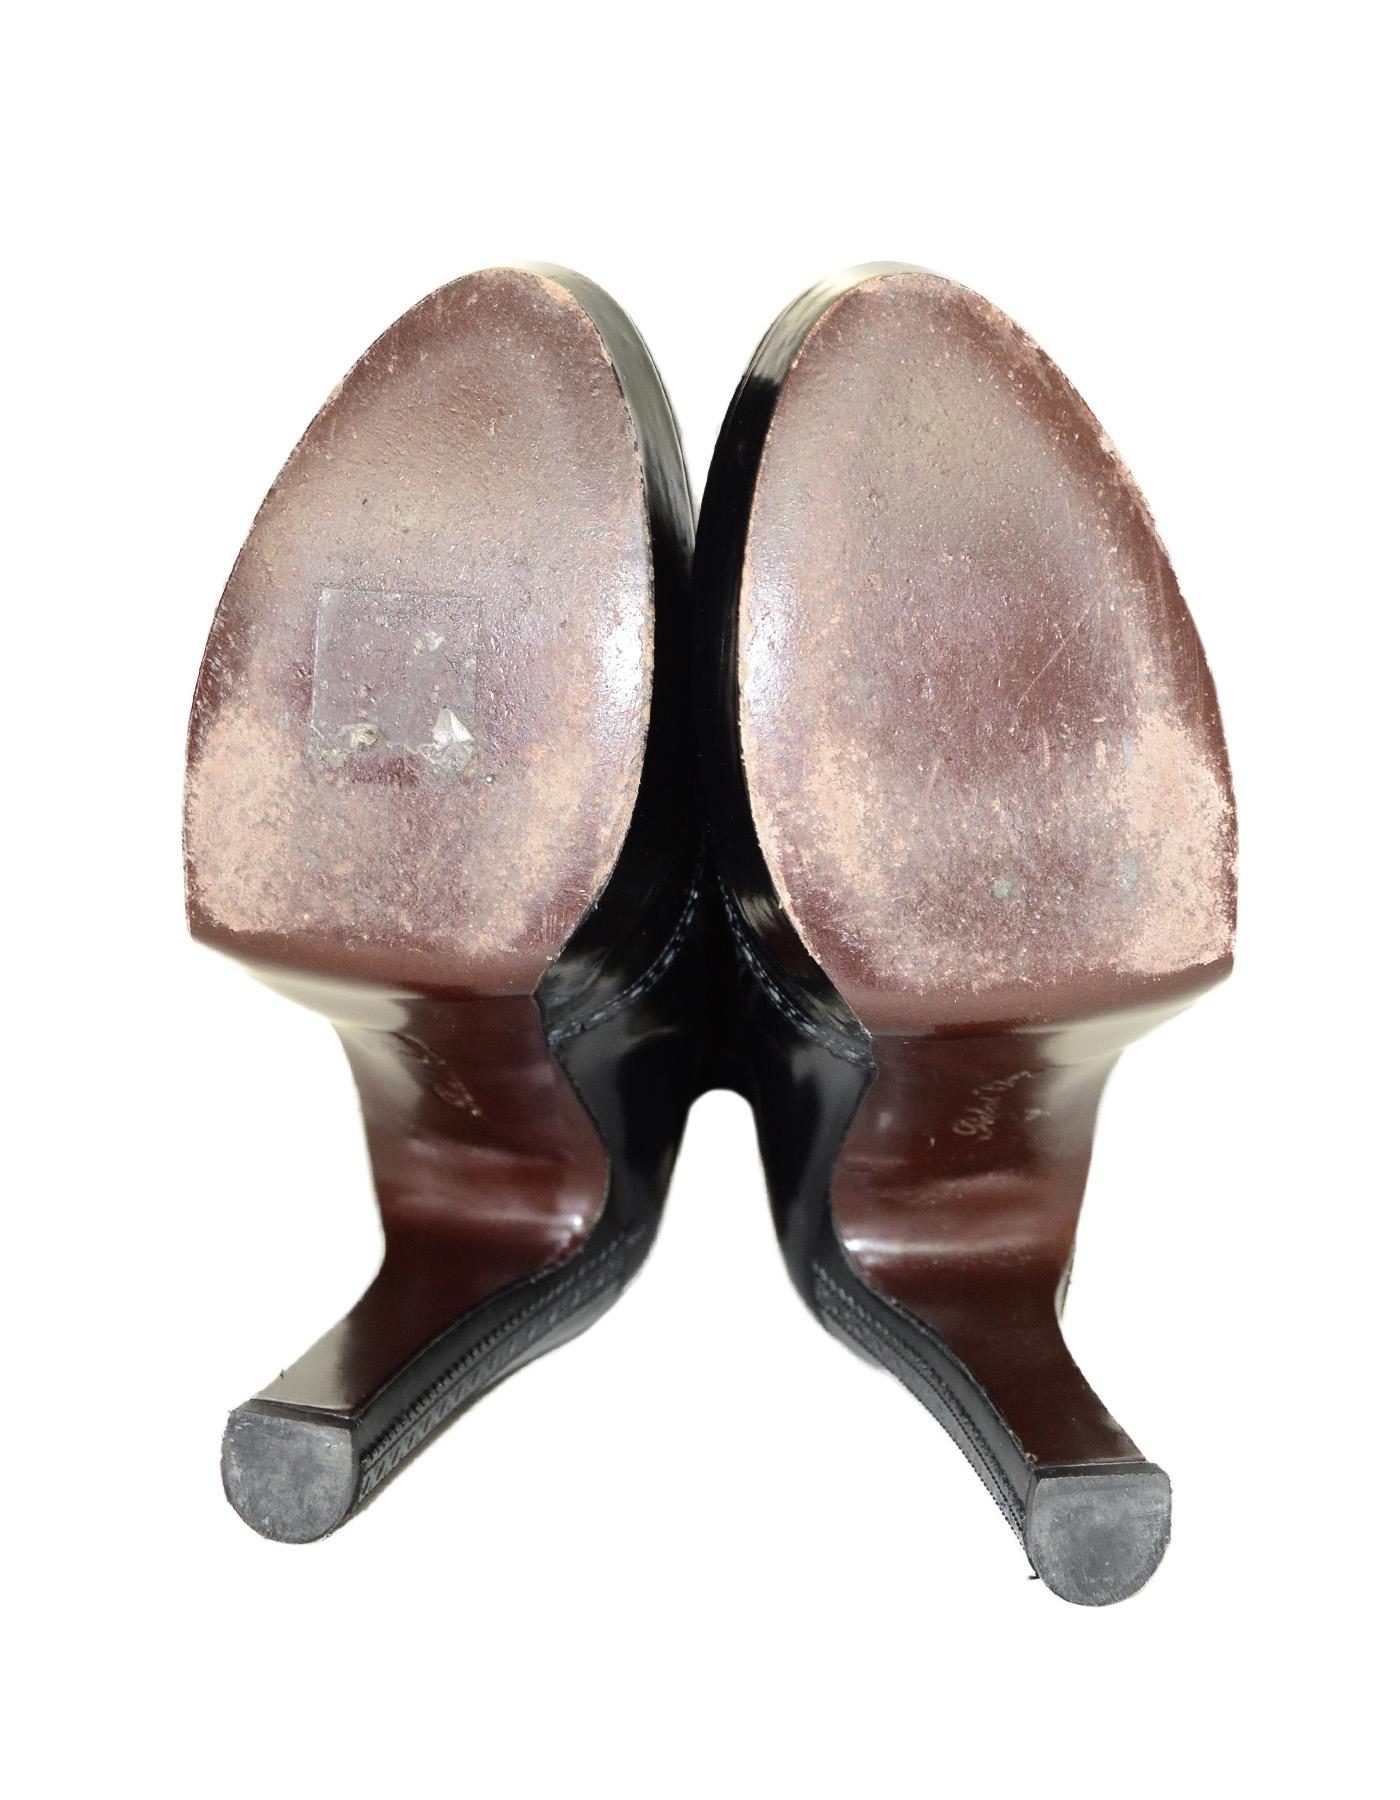 Robert Clergerie Black Patent Leather Short Boot W/ Fur Trim Sz 9.5  8